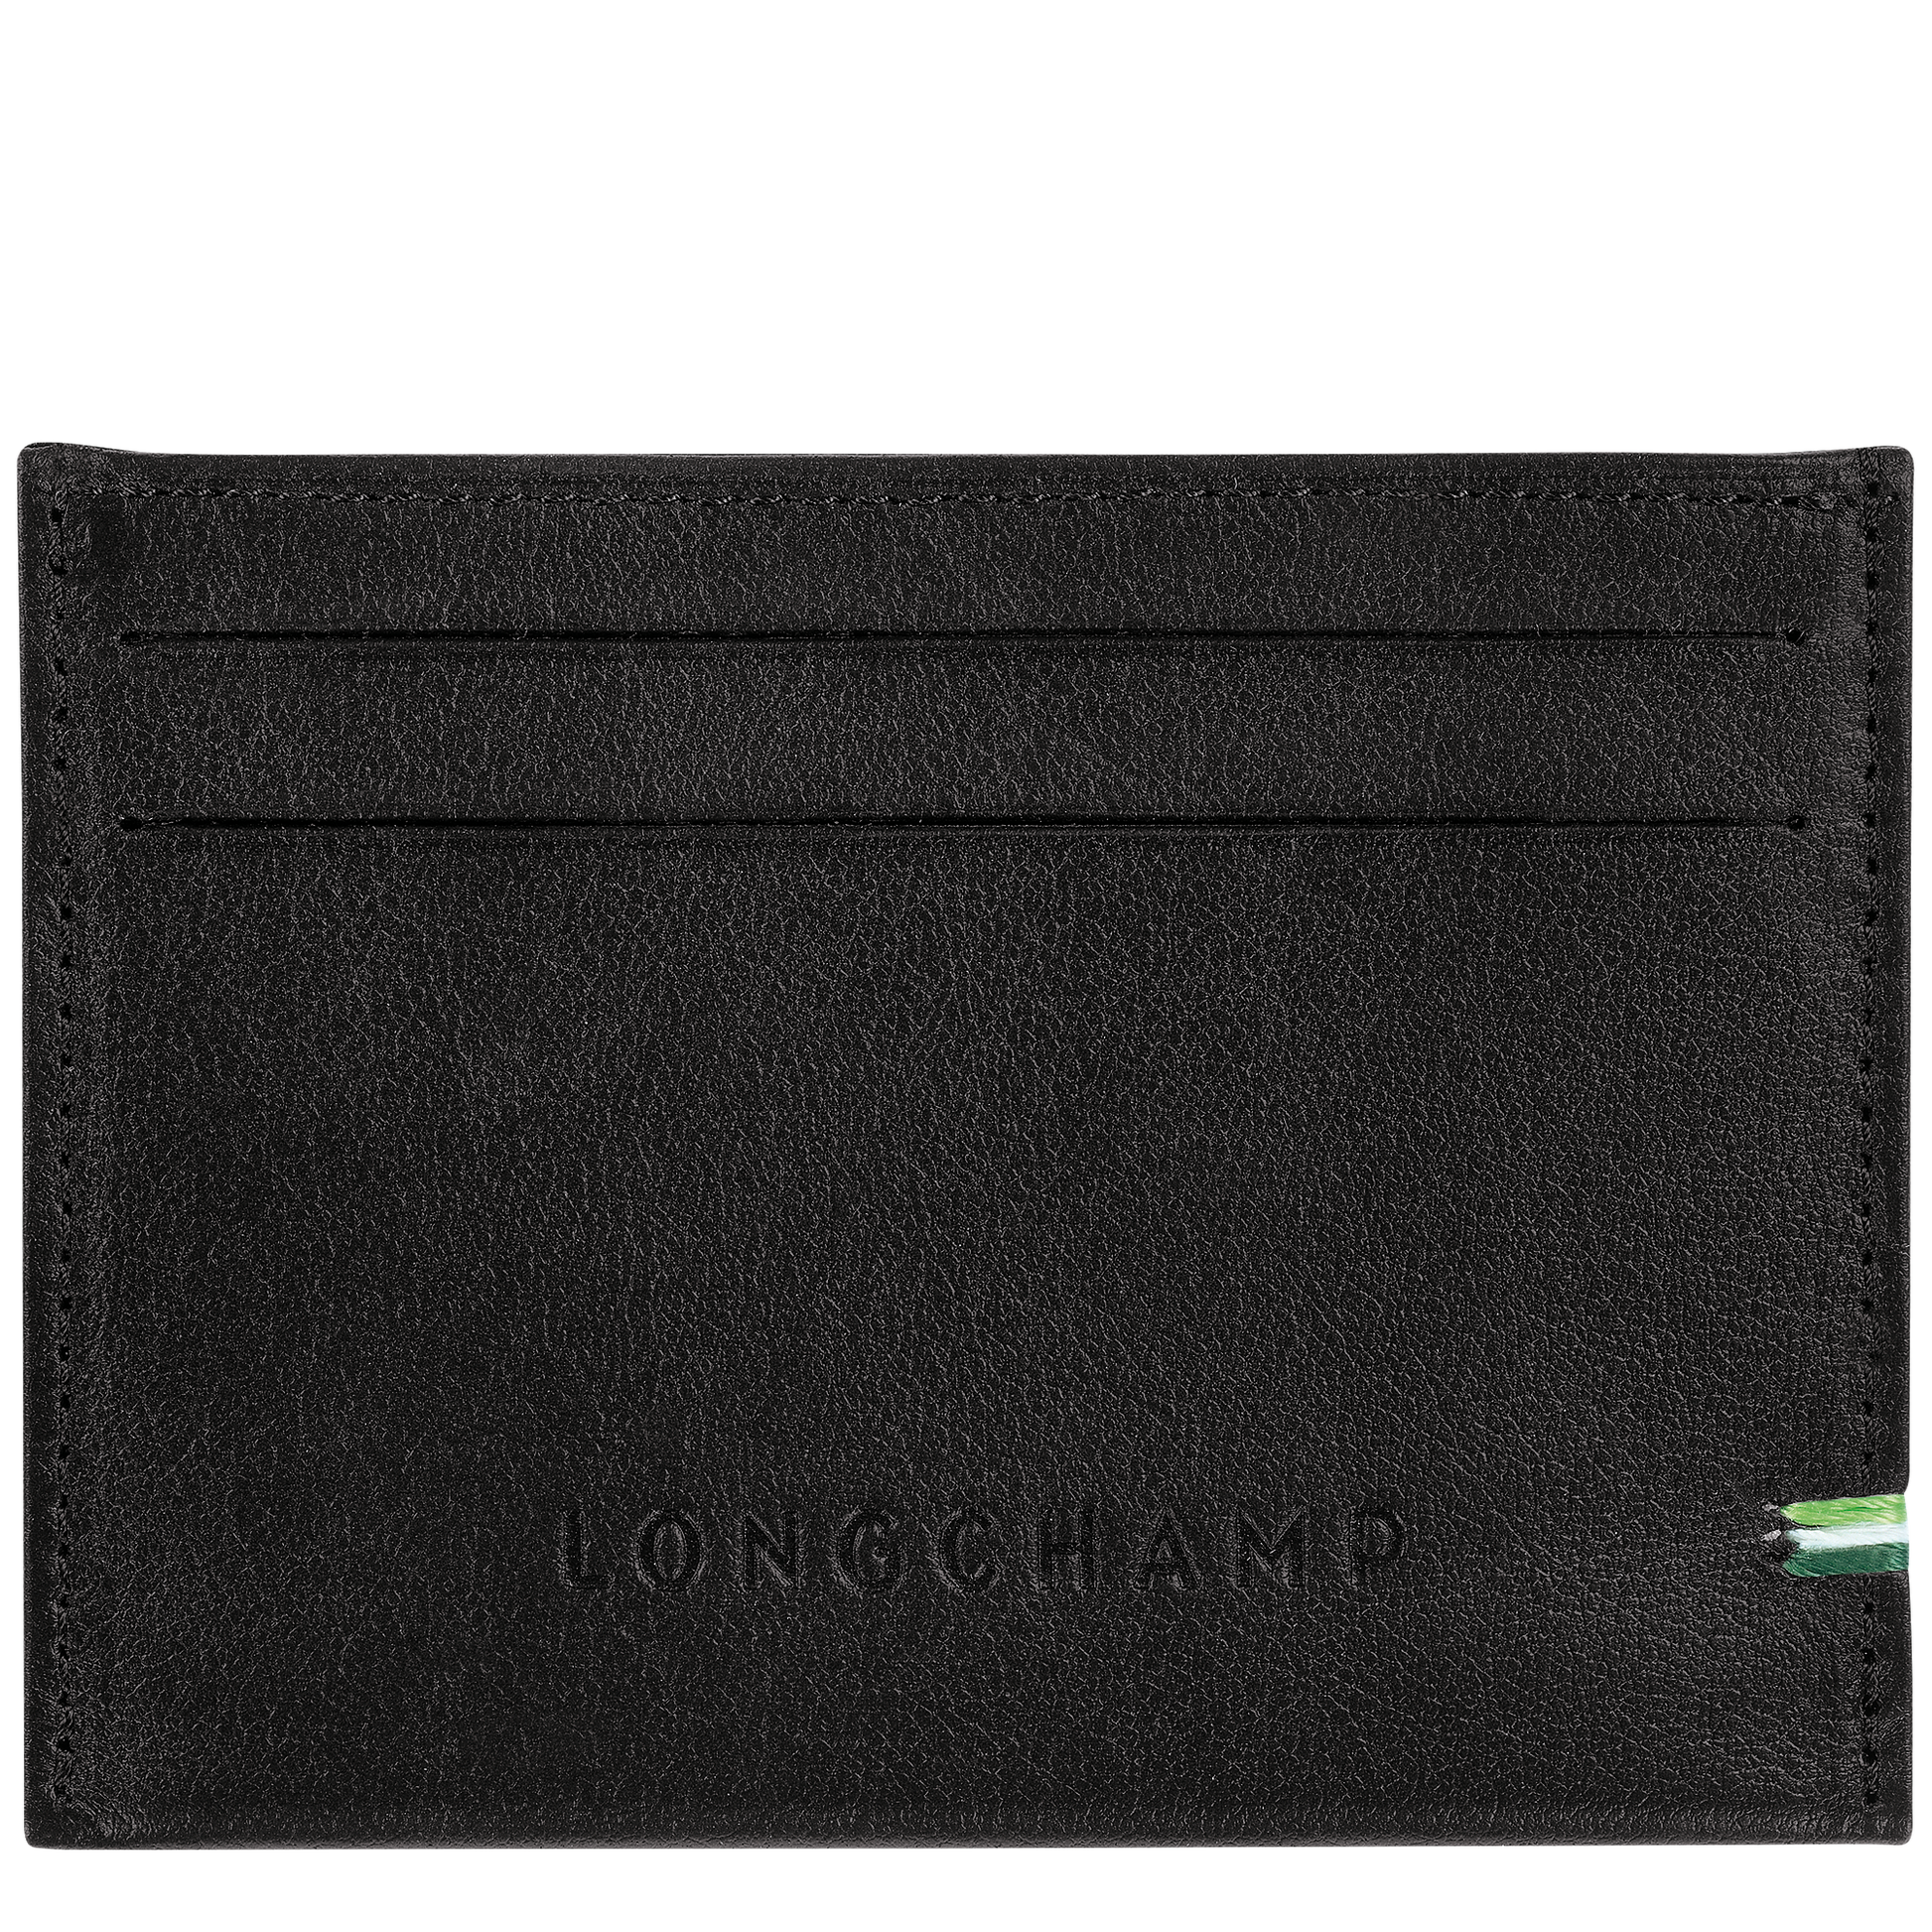 Longchamp LONGCHAMP SUR SEINE - Card holder in Black - 1 (SKU: L3218HCX001)